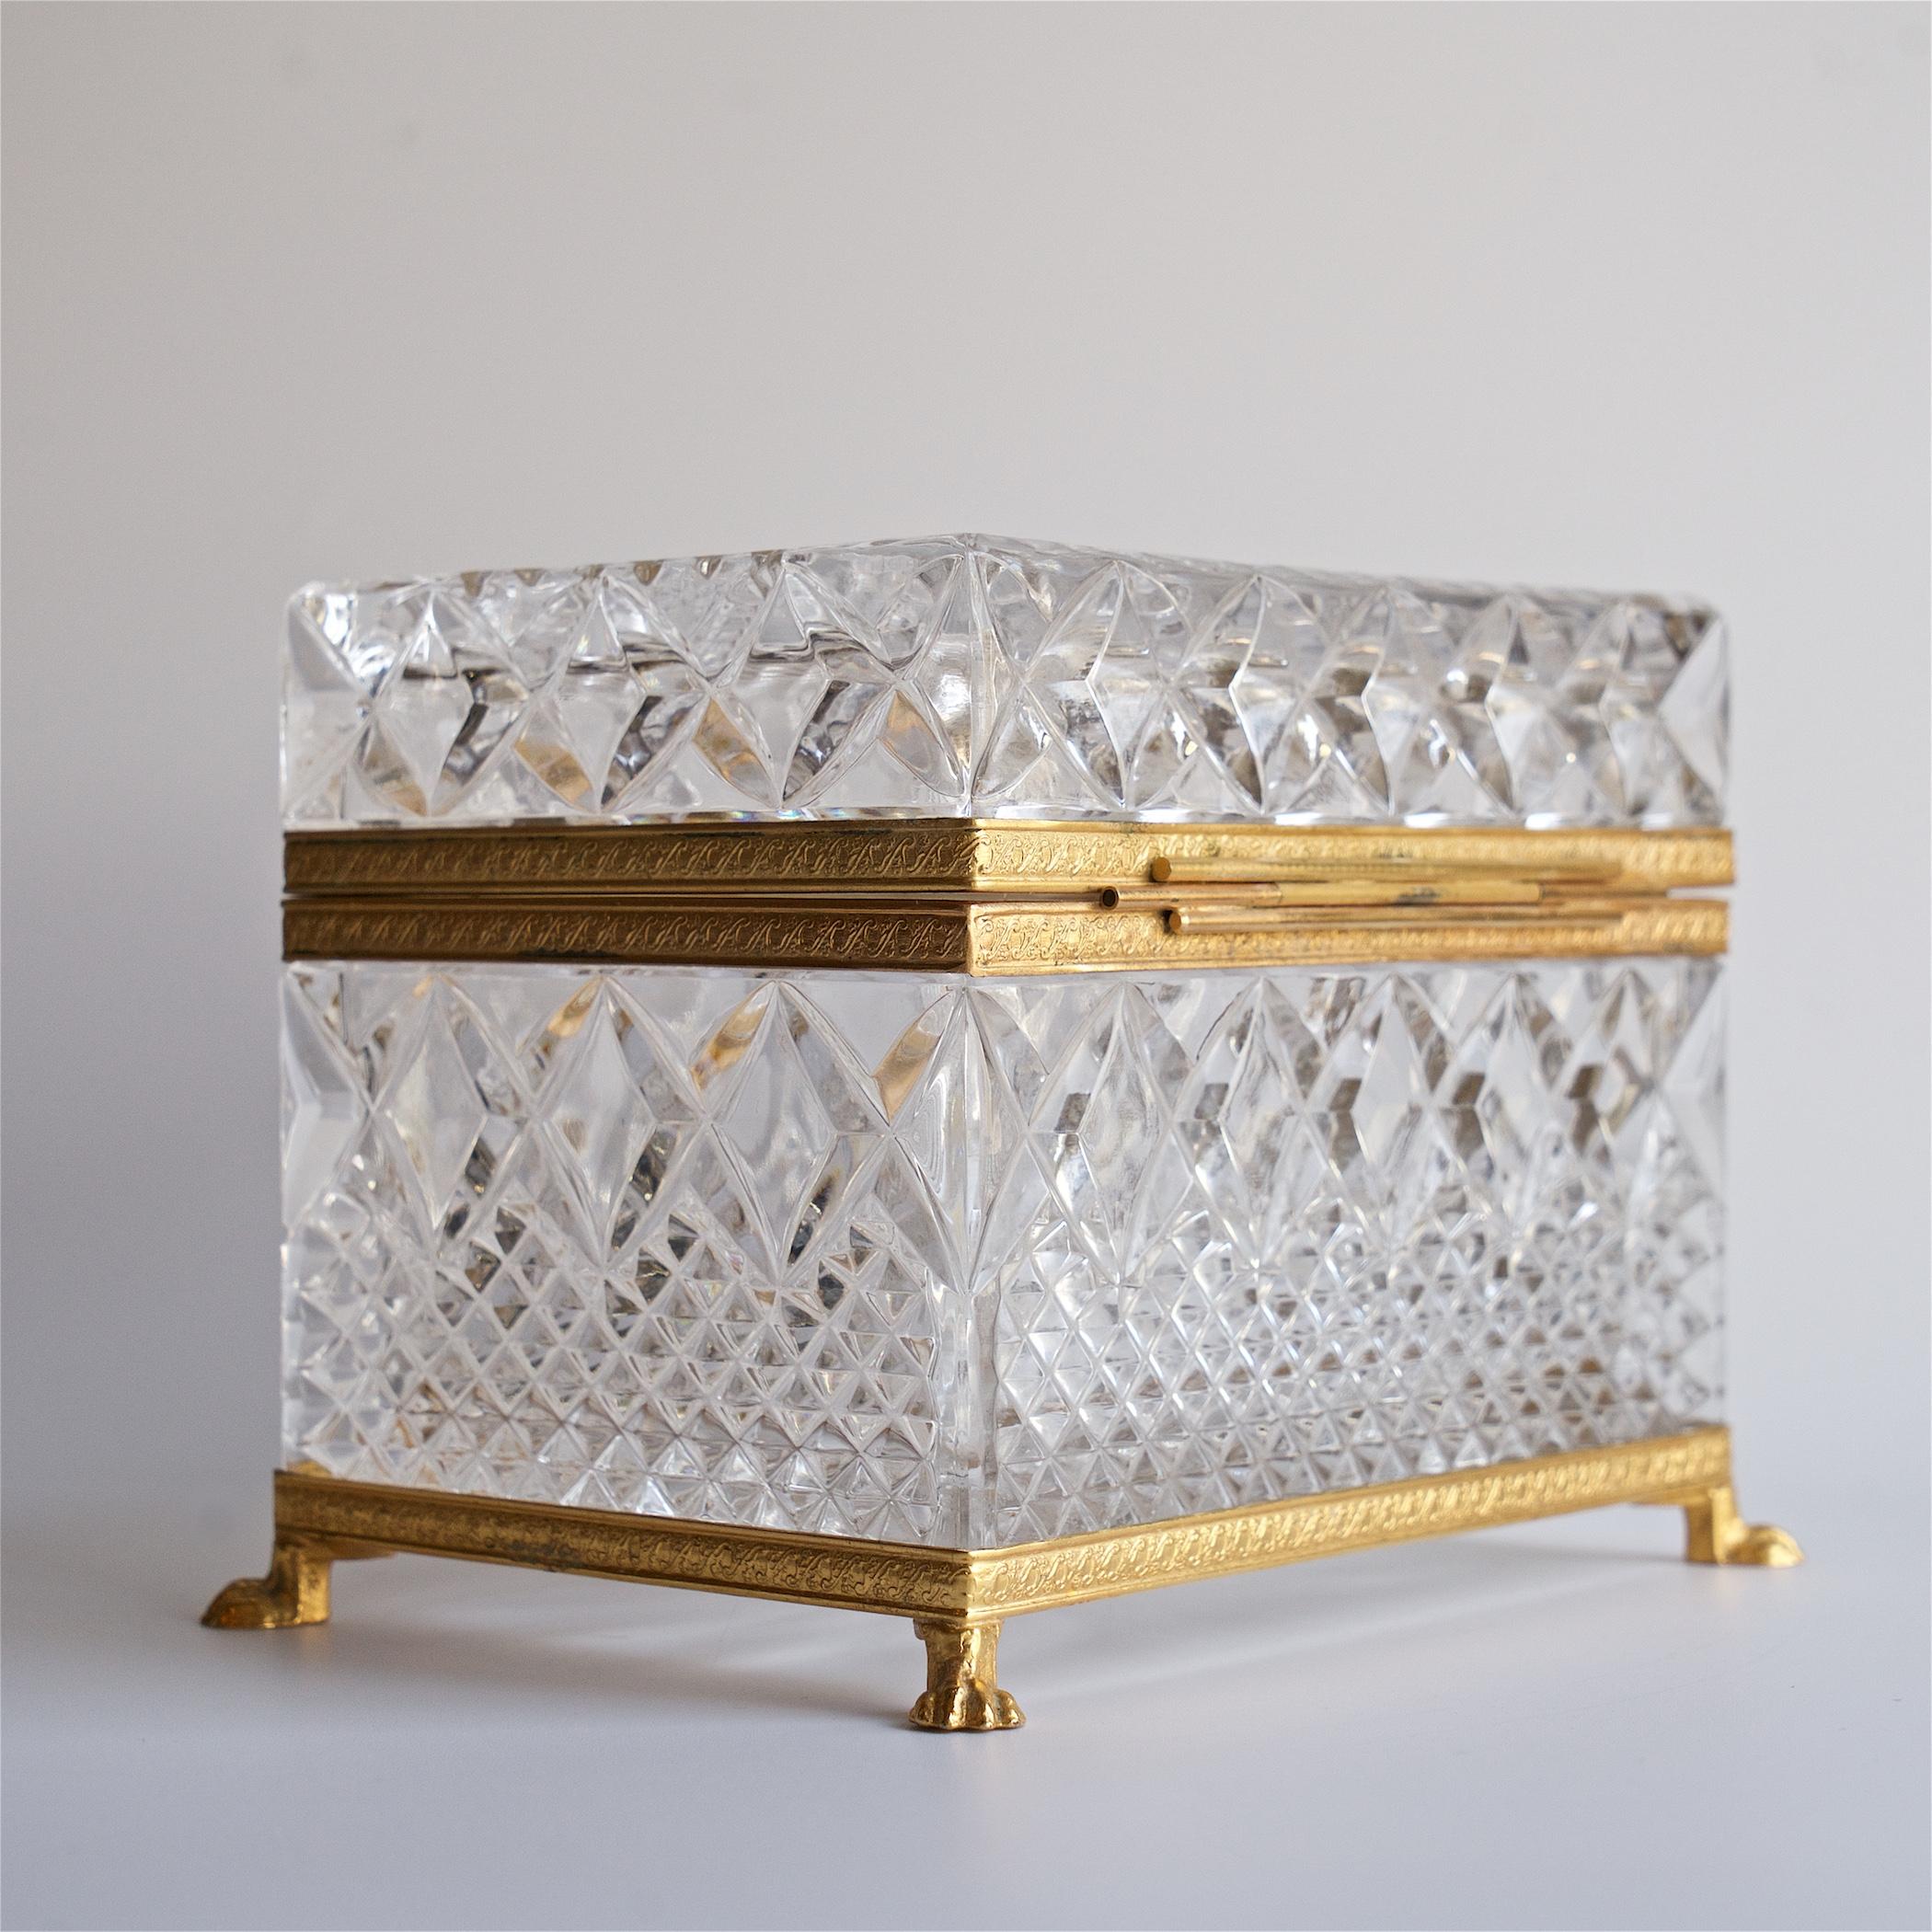 Victorian Vintage Ormolu Jewelry Box Sugar Casket Cut Glass Crystal Gilt French Brass Trim